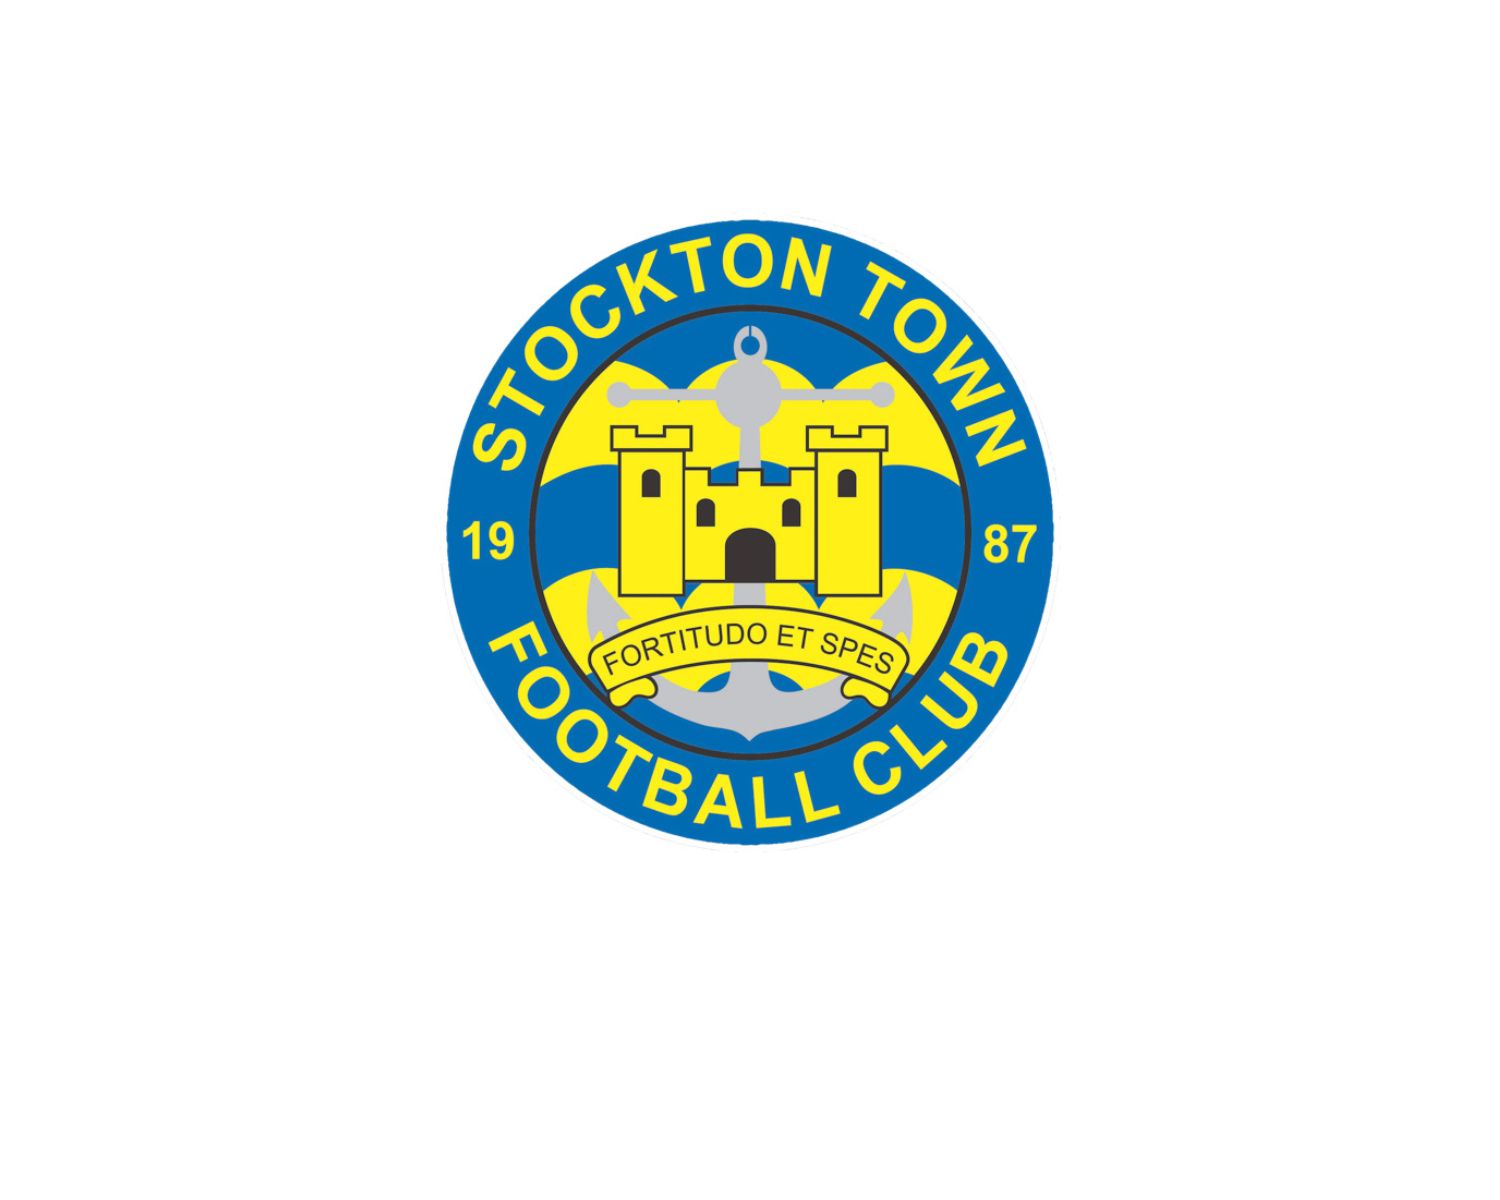 stockton-town-fc-14-football-club-facts